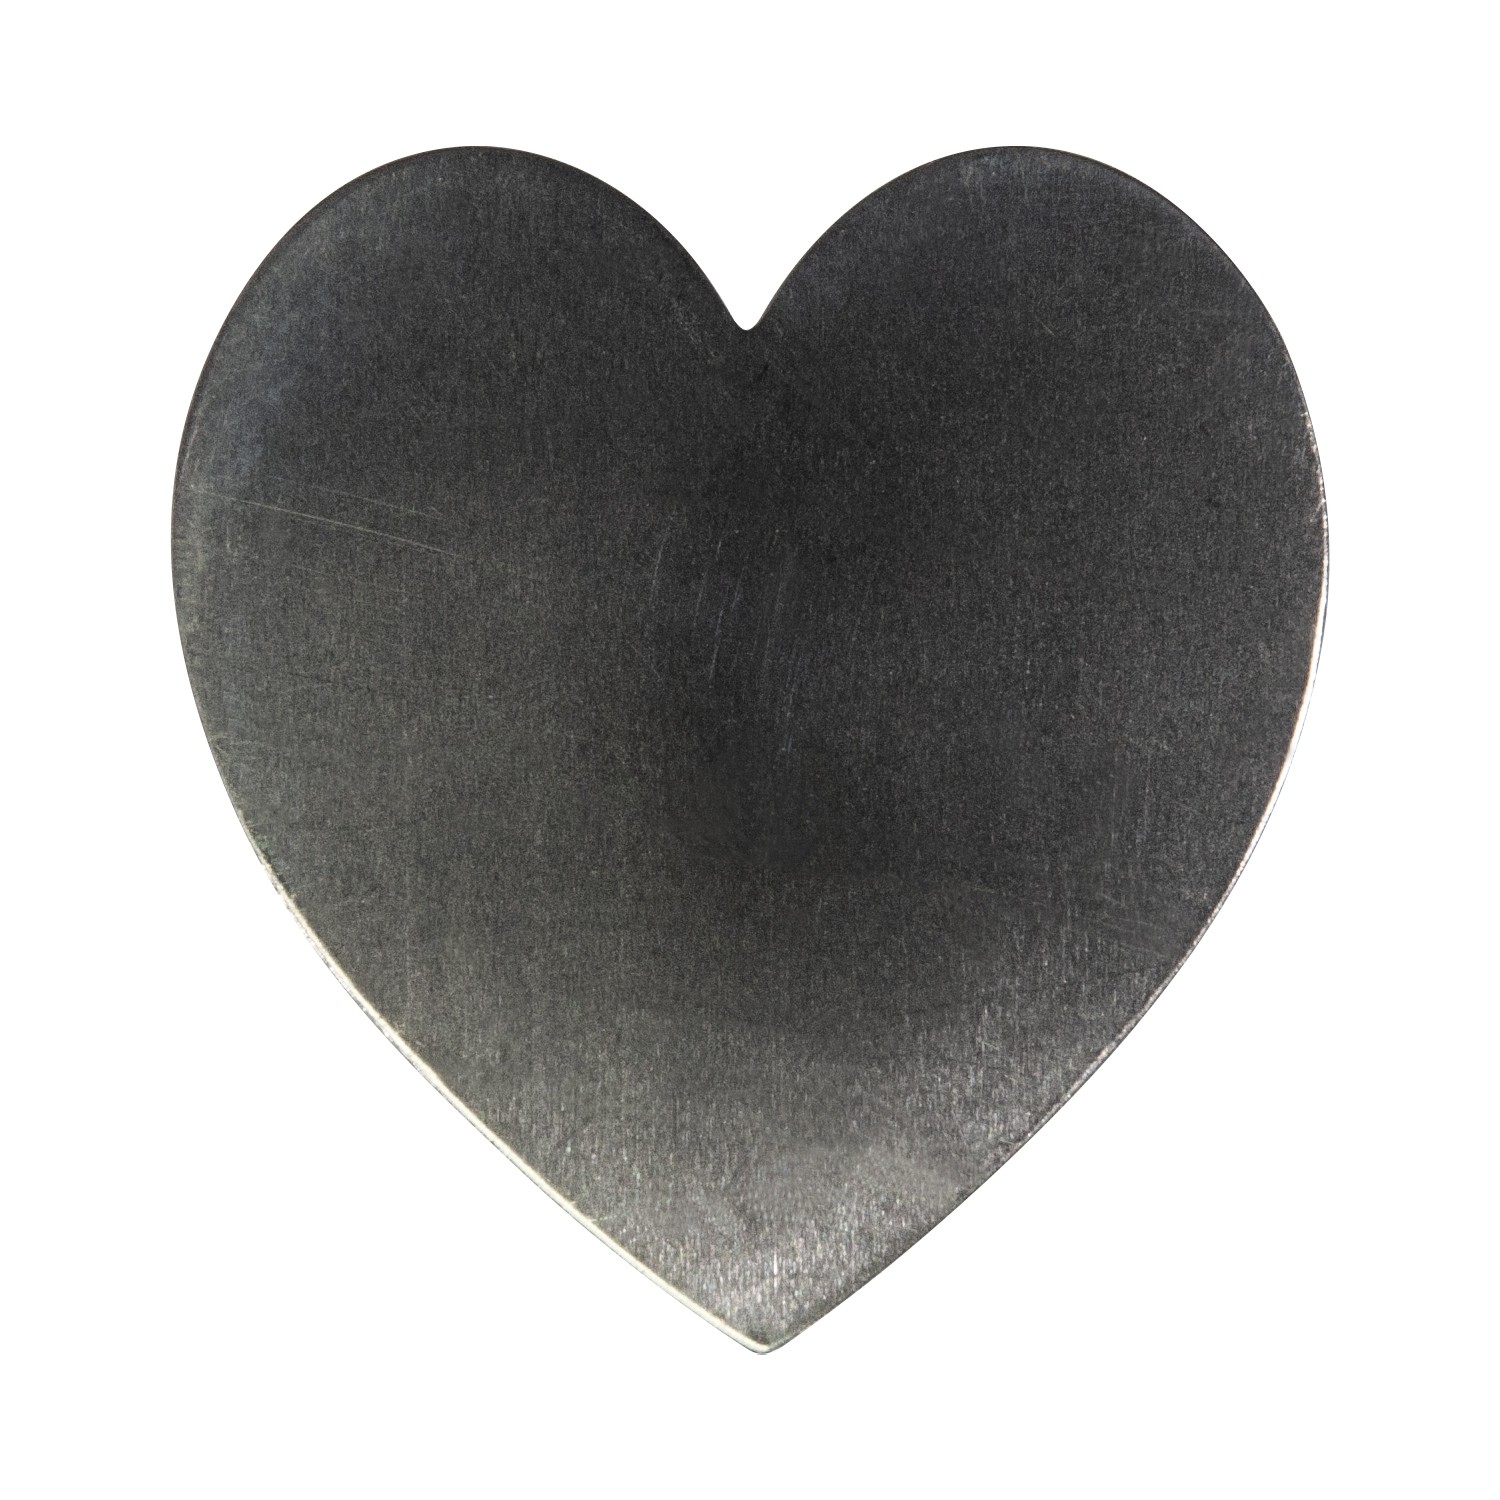 6/Pk of 24 Gauge Large Nickel Silver Hearts - 1-3/8" x 1-1/2" Charm Blanks